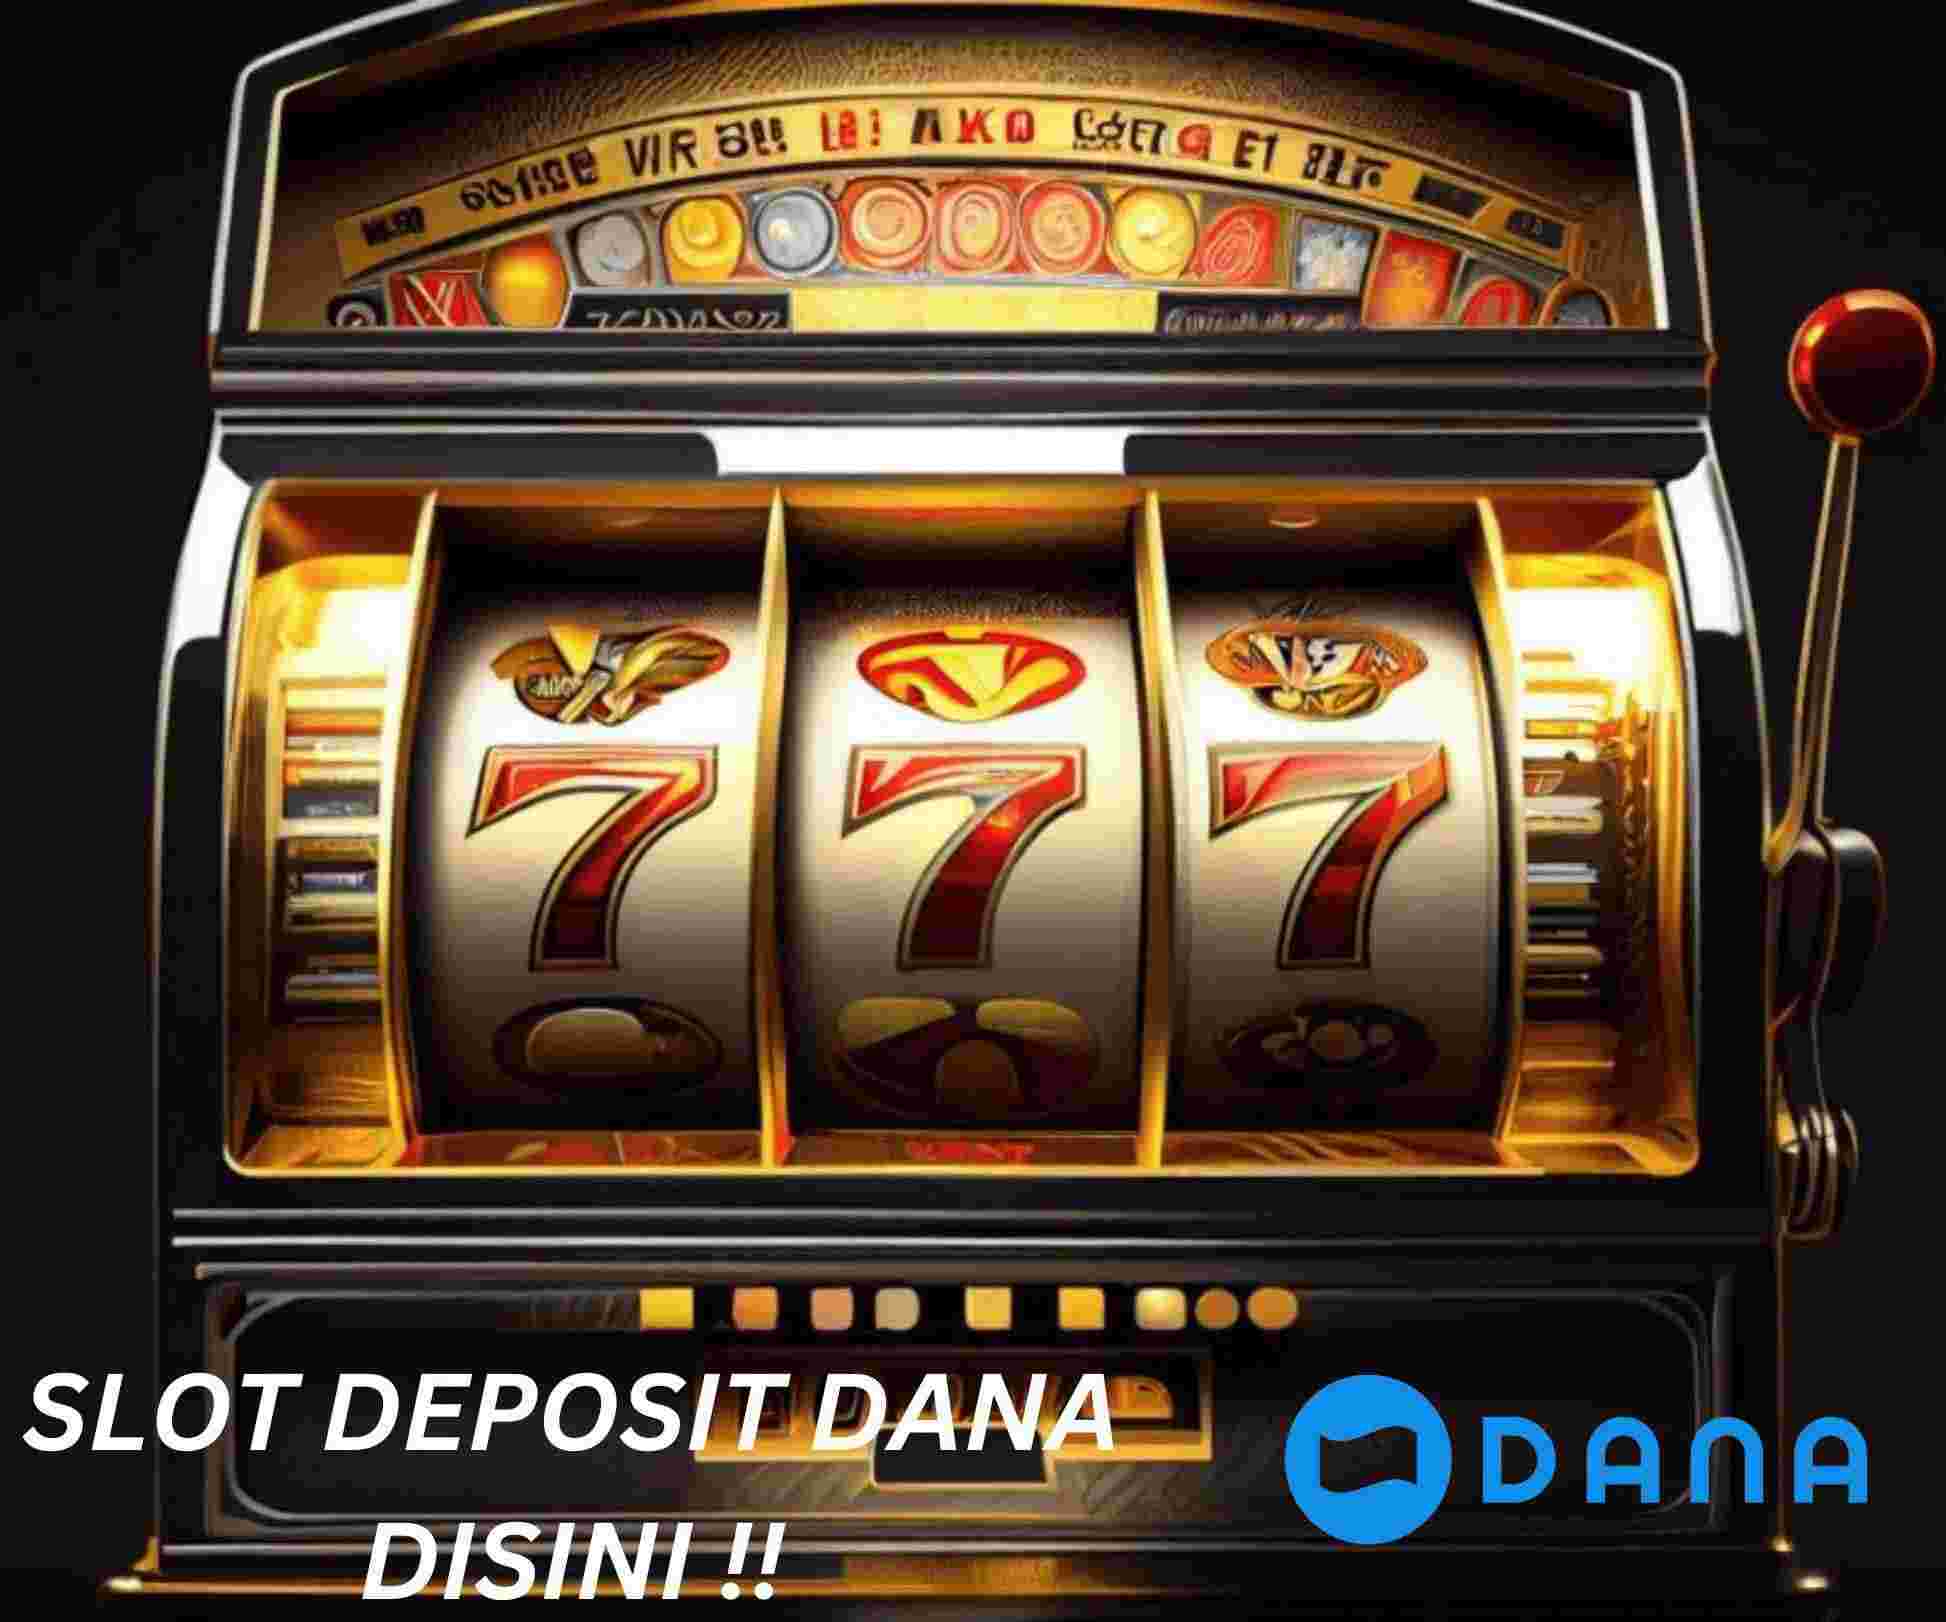 It's easy to play slots via "slot deposit dana" at the janjiwin agent